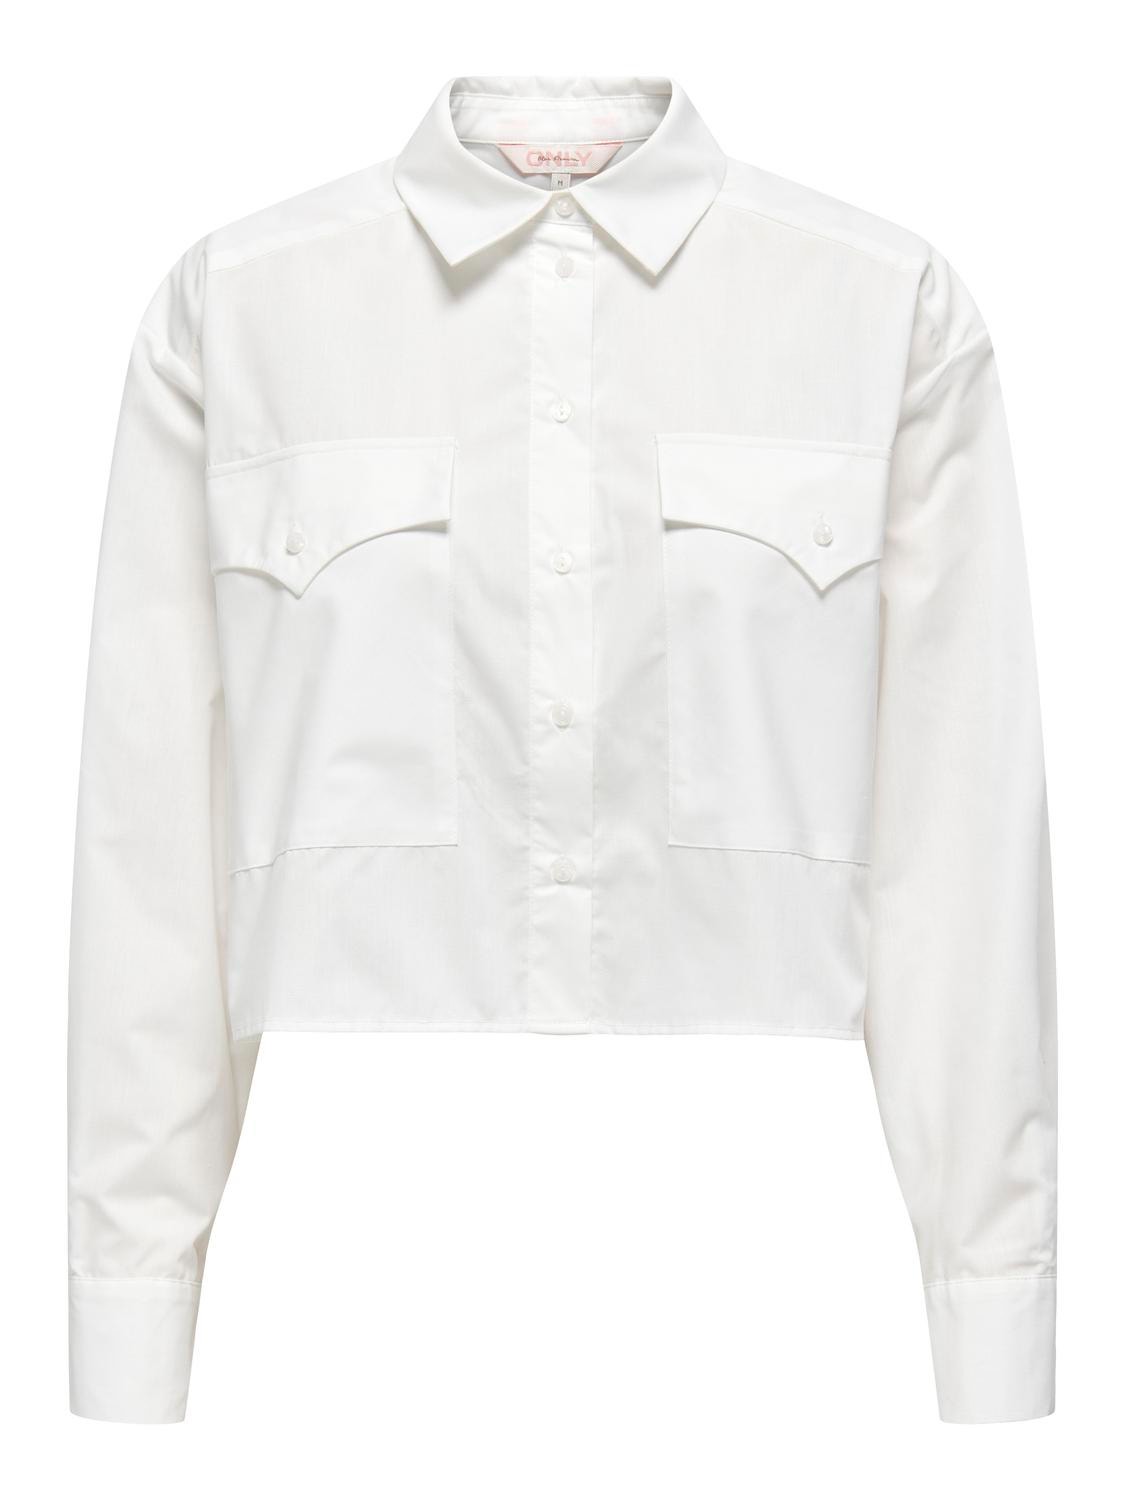 ONLY Camisas Corte regular Cuello de camisa Puños abotonados -White - 15327688